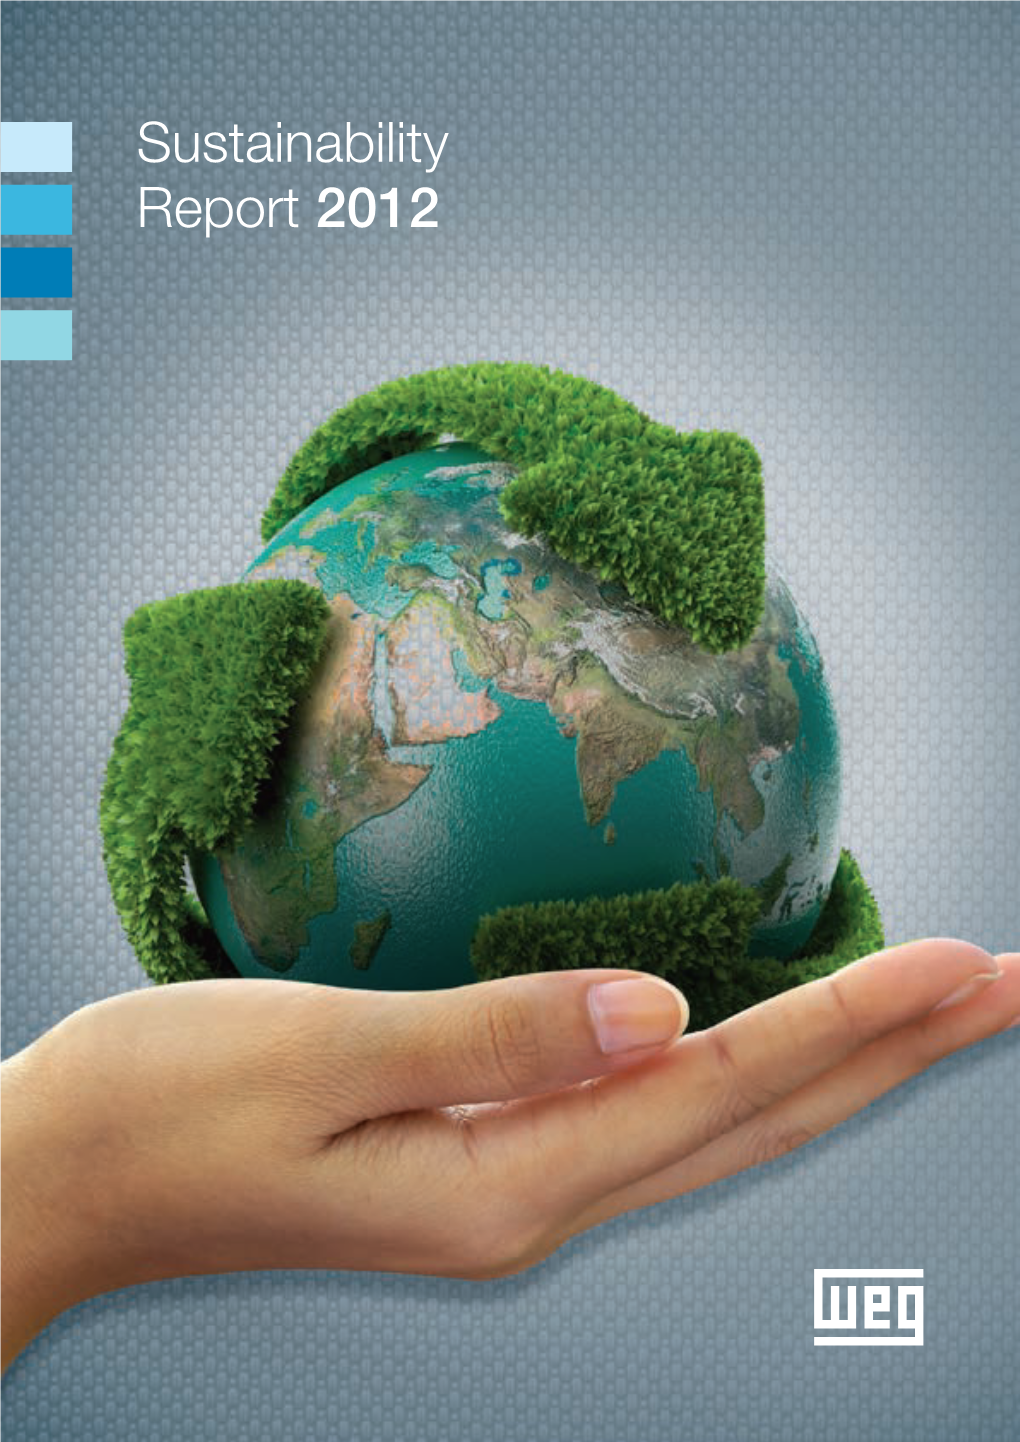 Sustainability Report 2012 SUMMARY